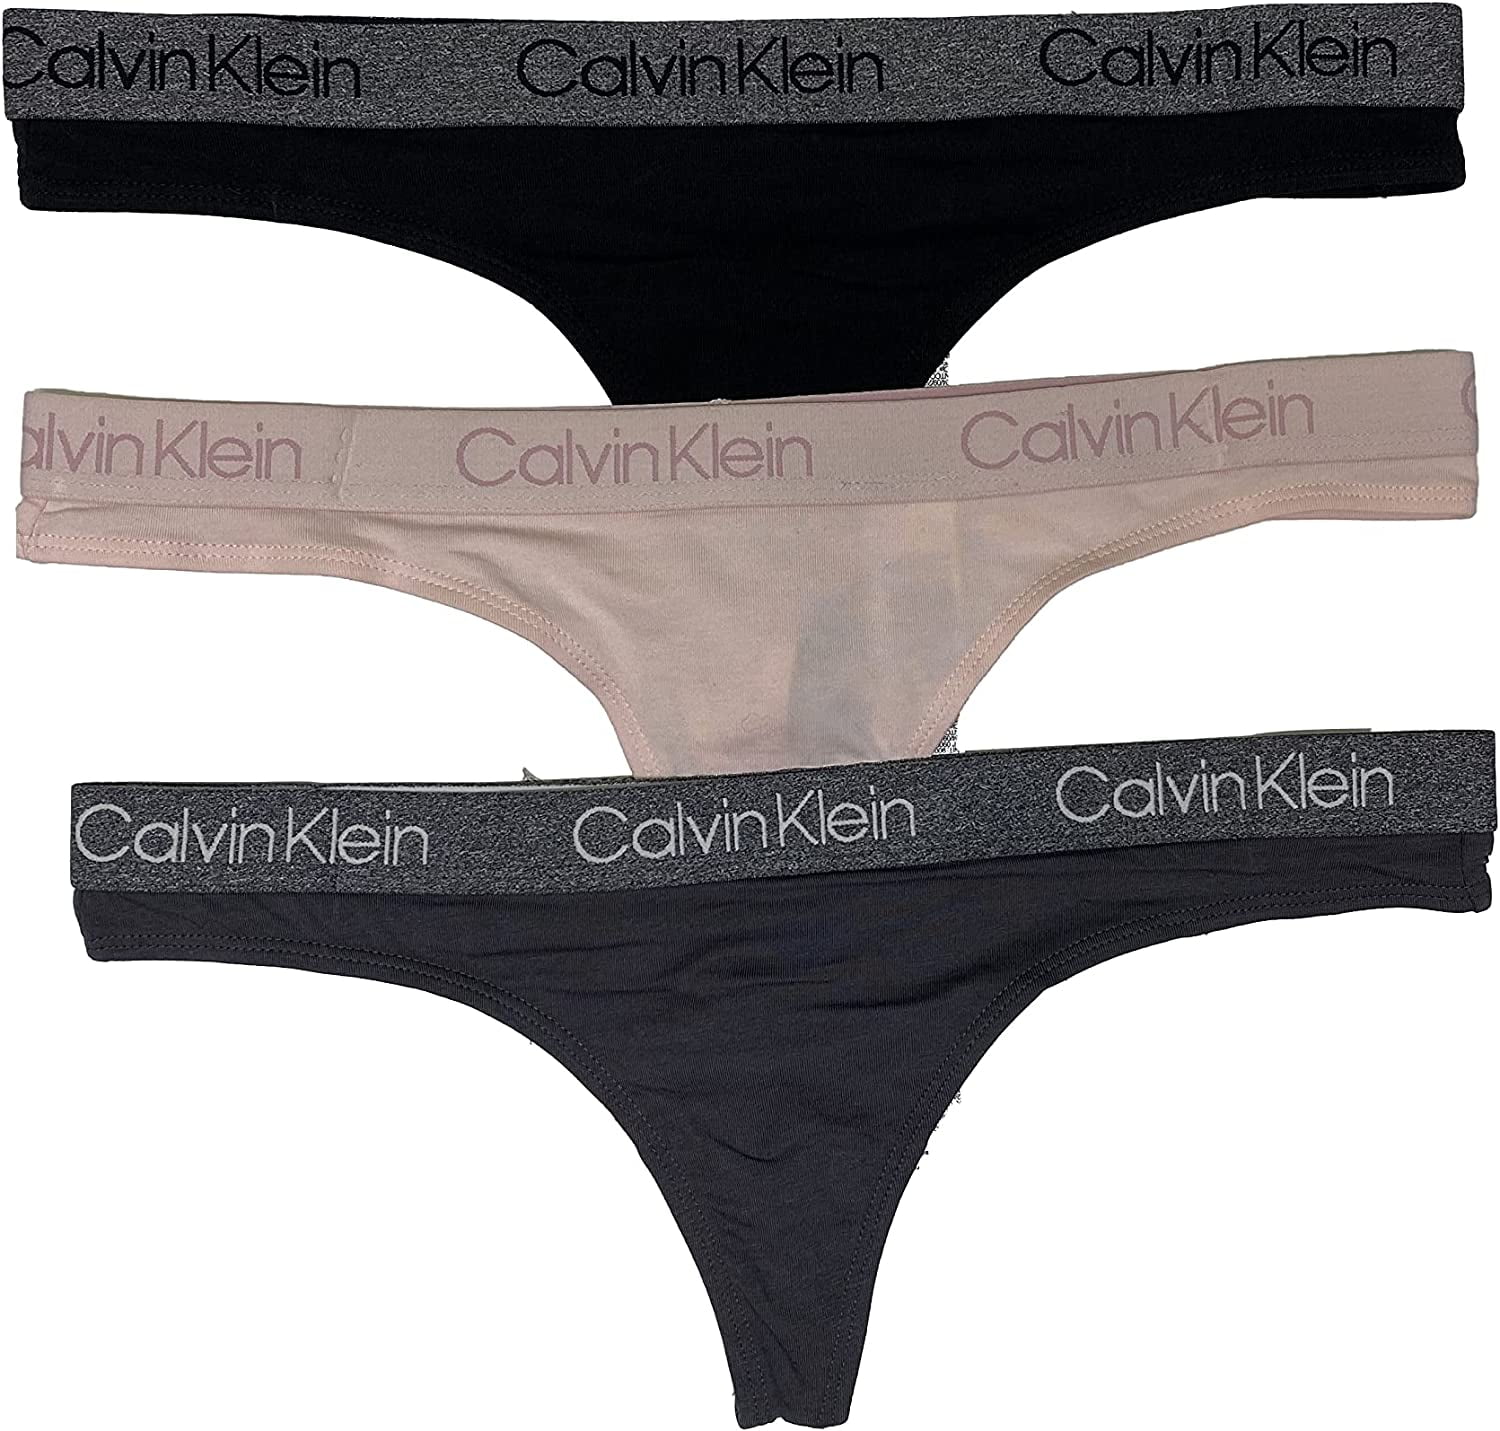 Calvin Klein 3 Pack Walmart.com